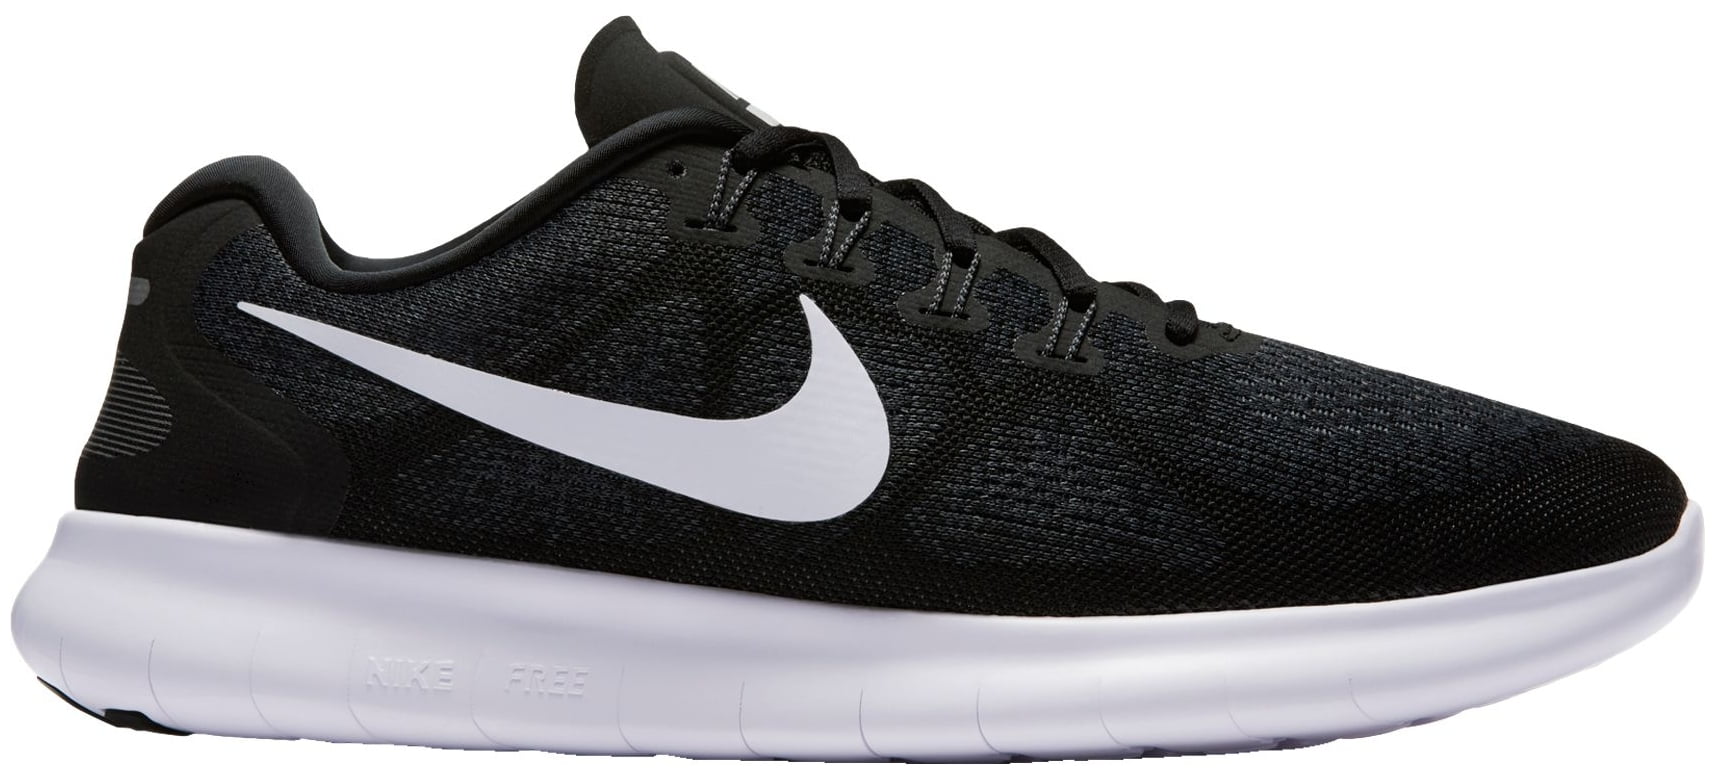 Nike Men's Free RN Running Shoes (Black/White, 11.5) -